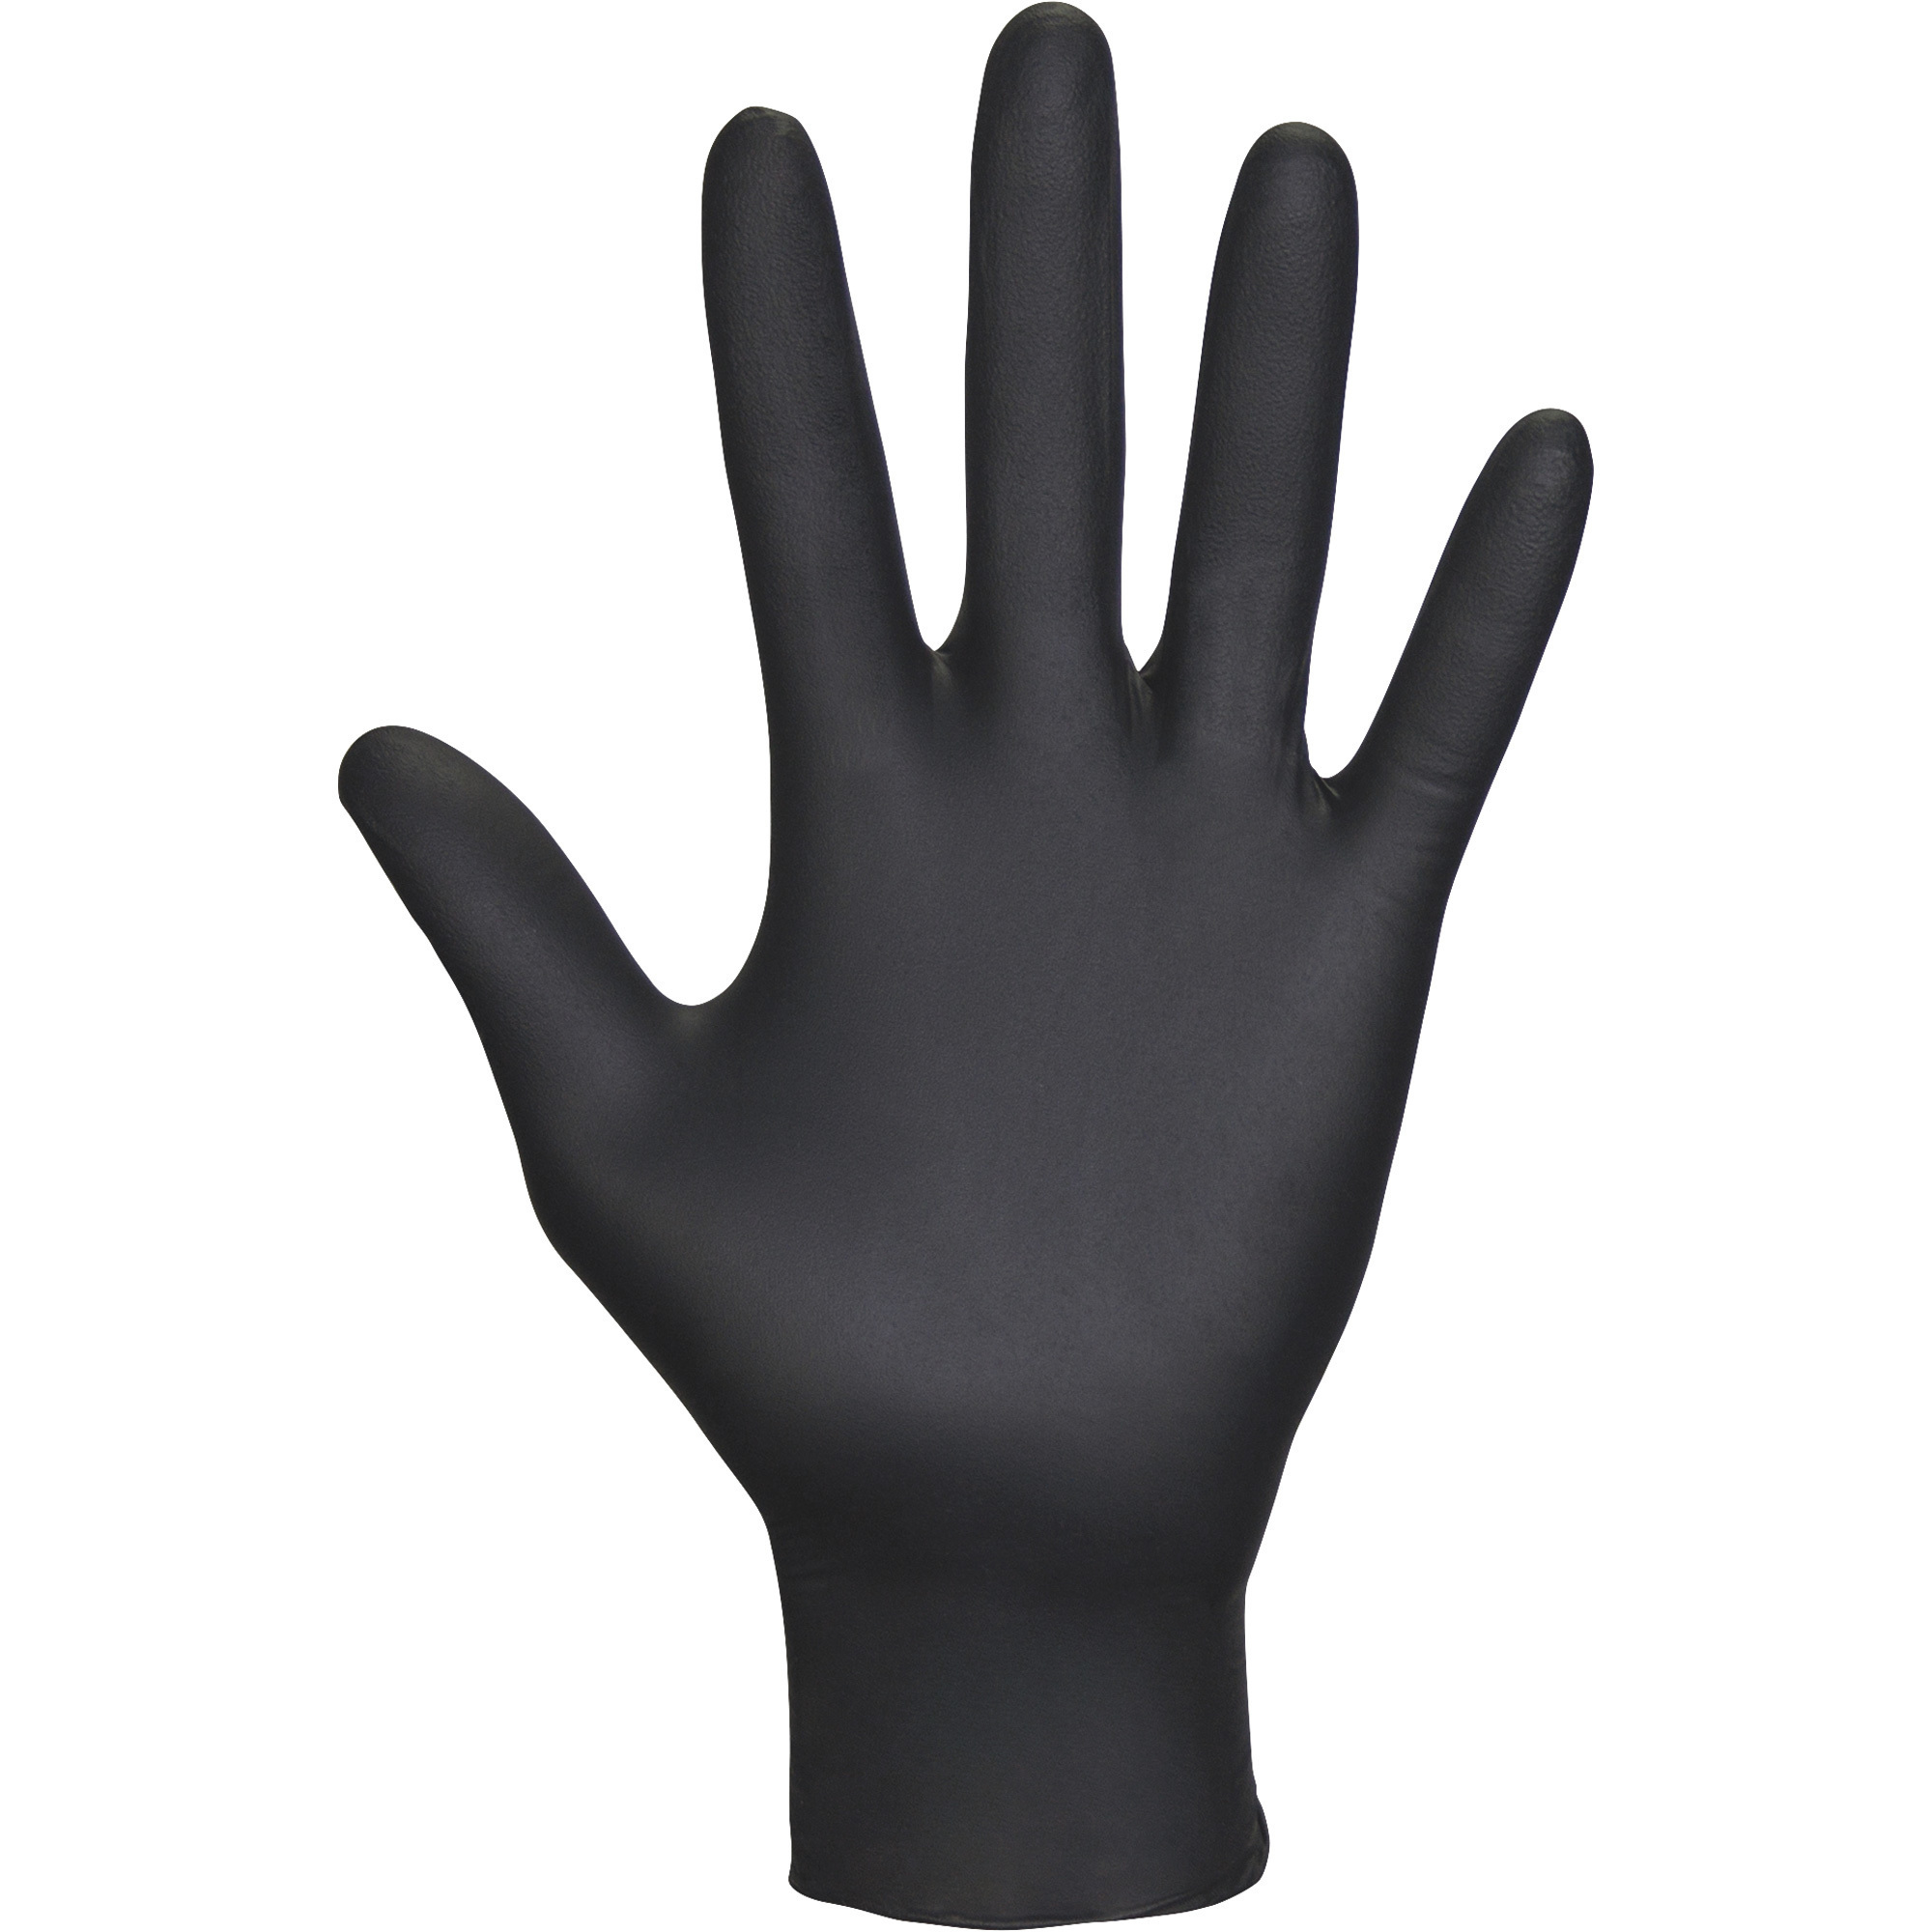 6 Mil SAS Raven Nitrile Powder-Free Disposable Gloves - 50 Pairs, Black, Large, ASTM D6978 Rated, Model# 66518